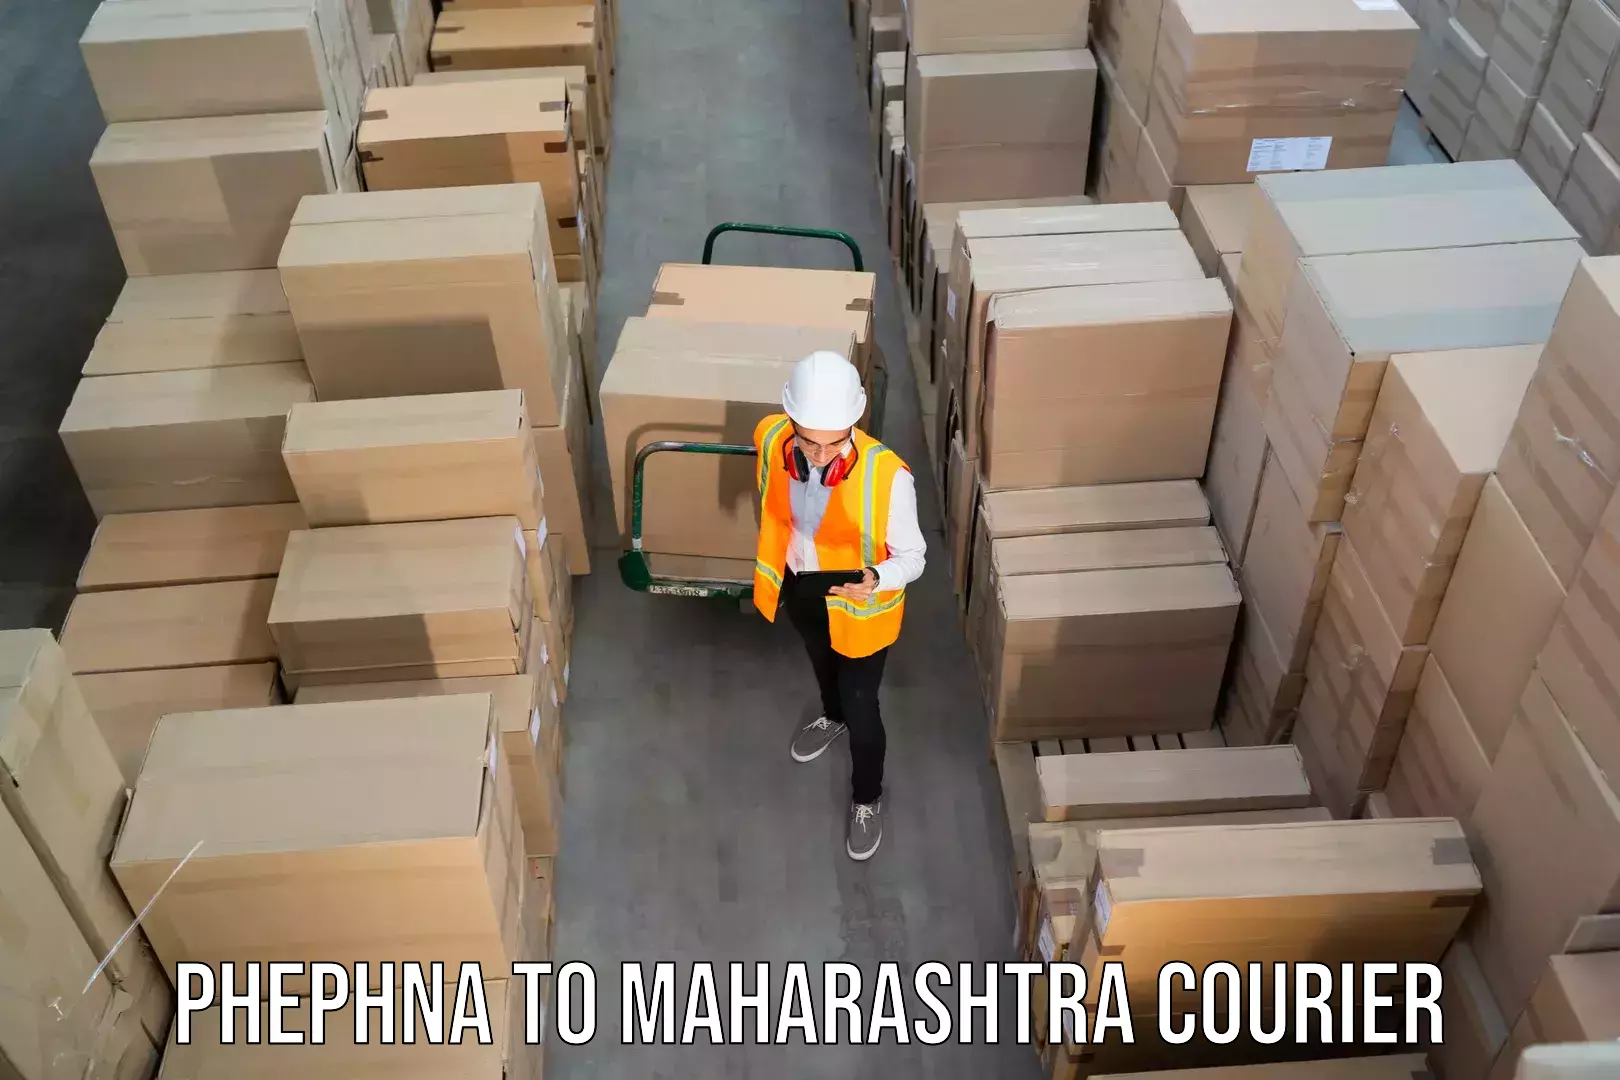 Efficient order fulfillment Phephna to Maharashtra